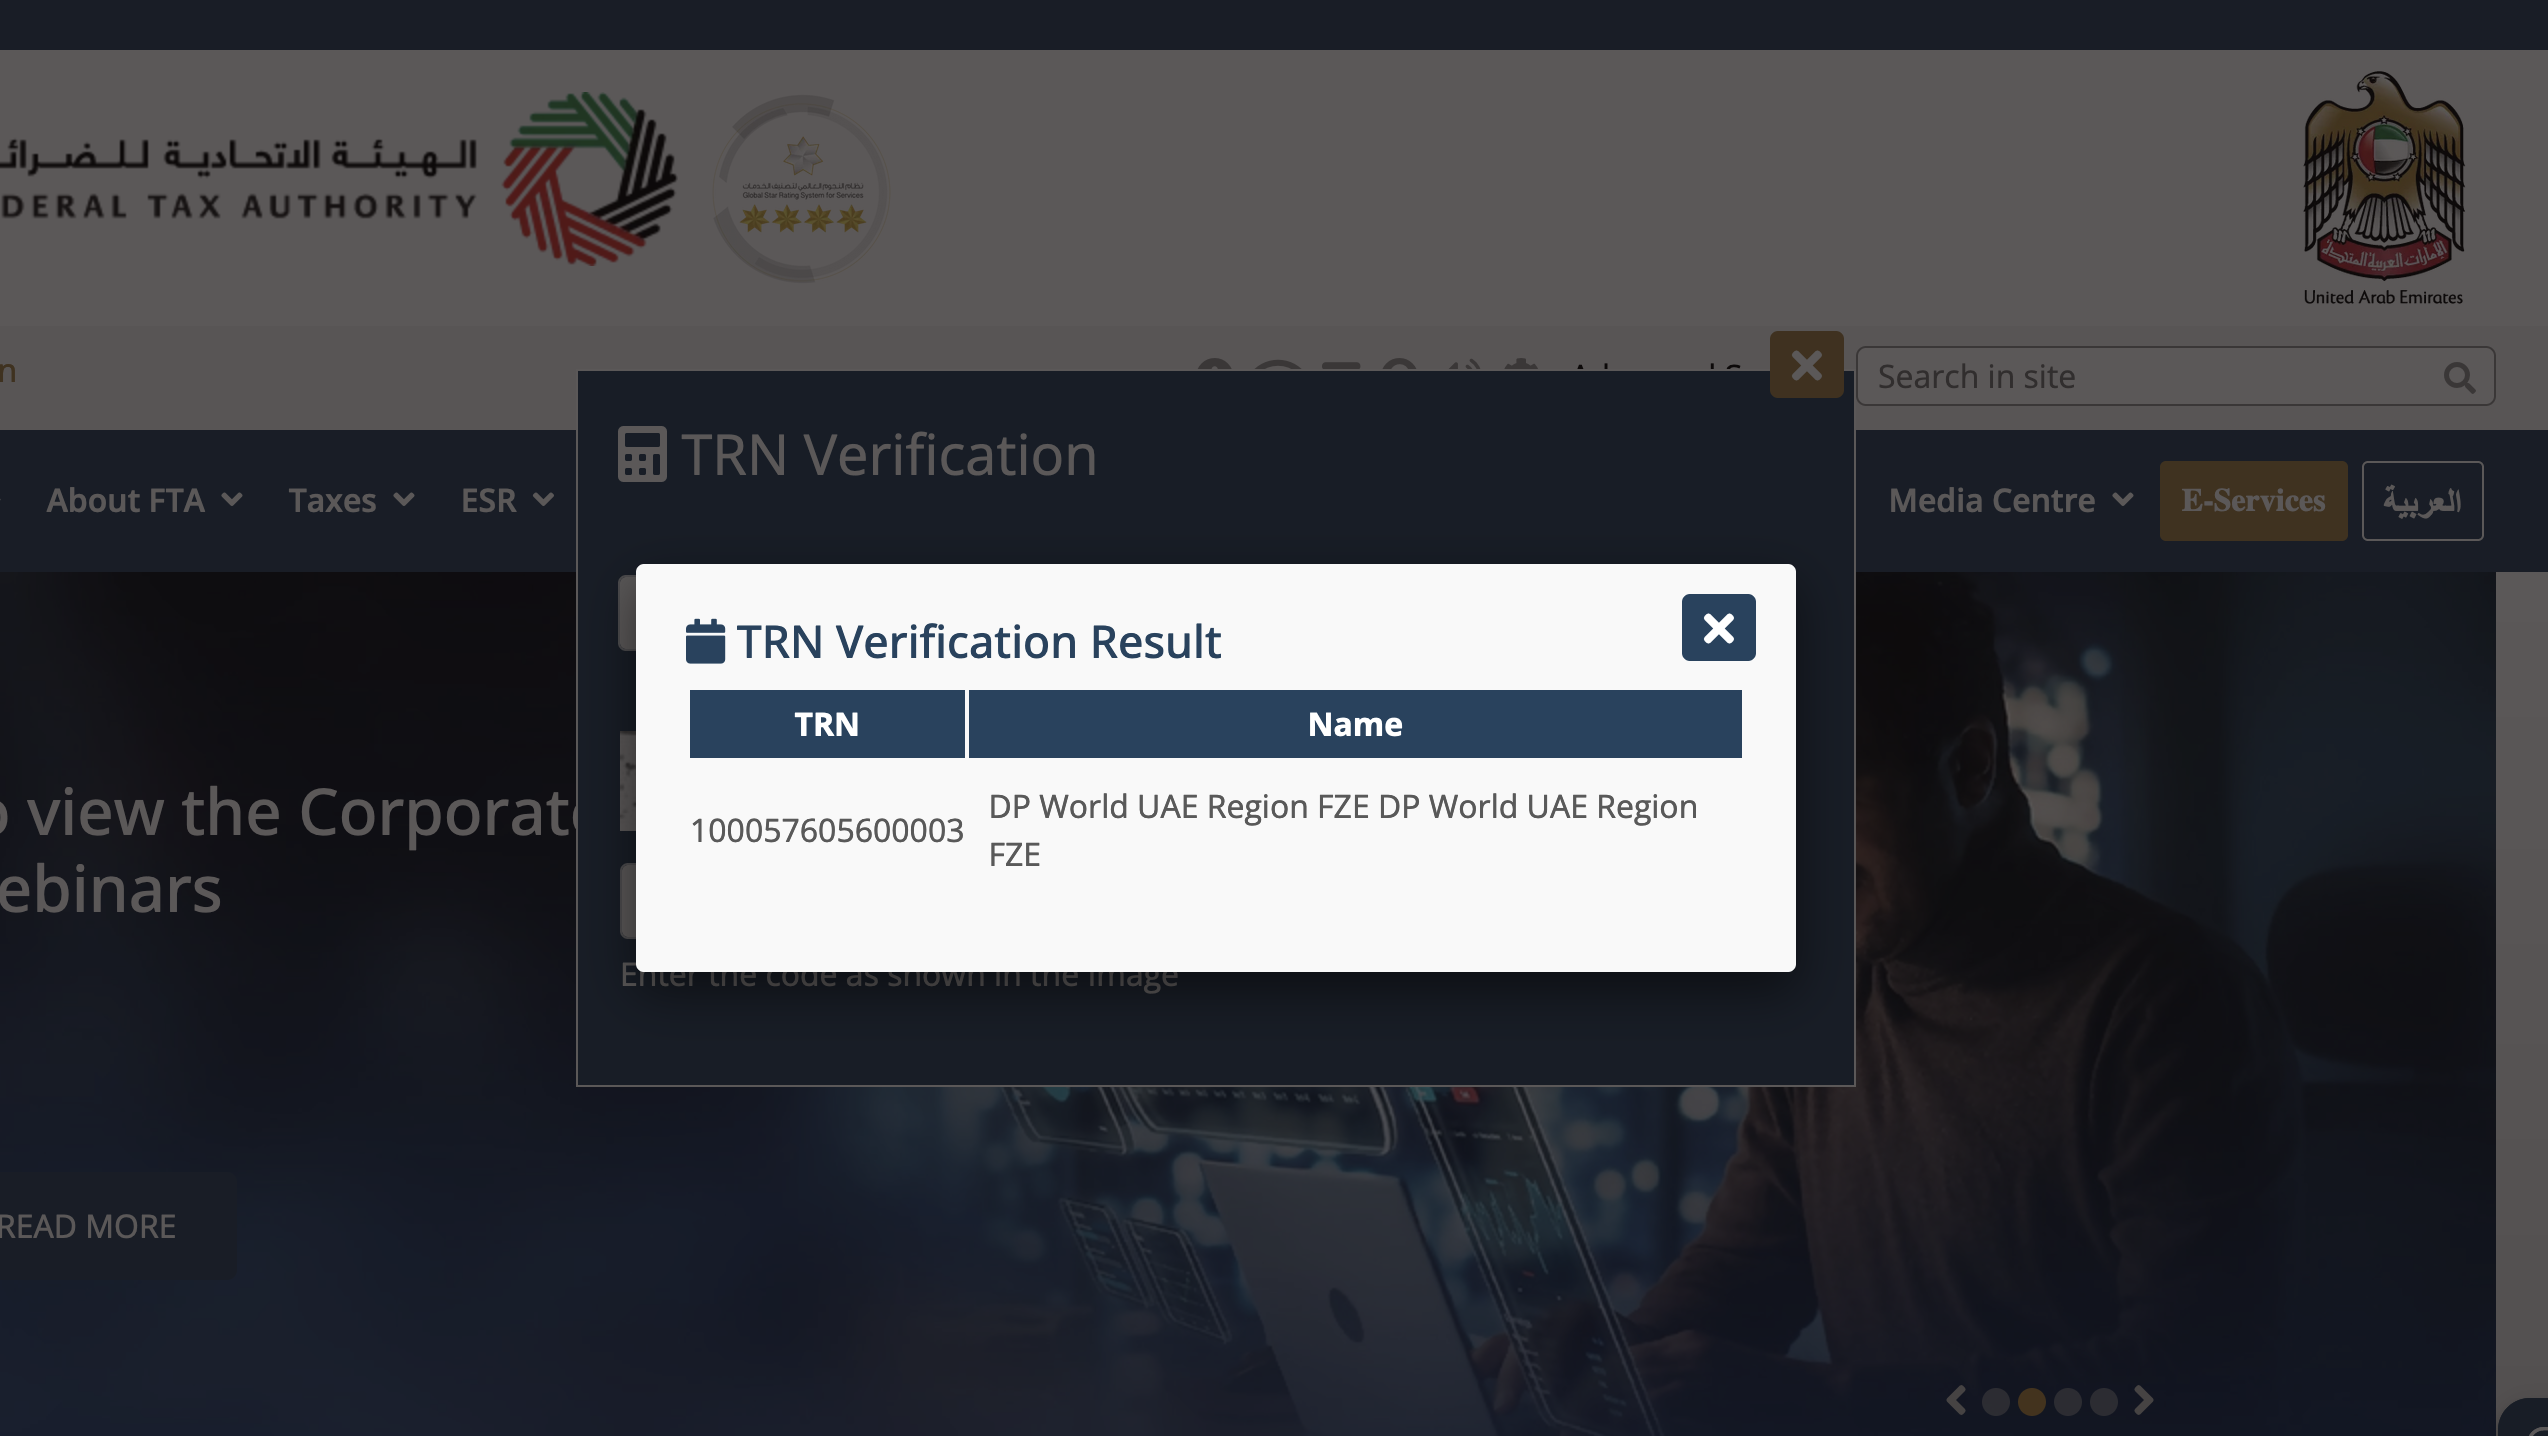 Successful TRN Verification details